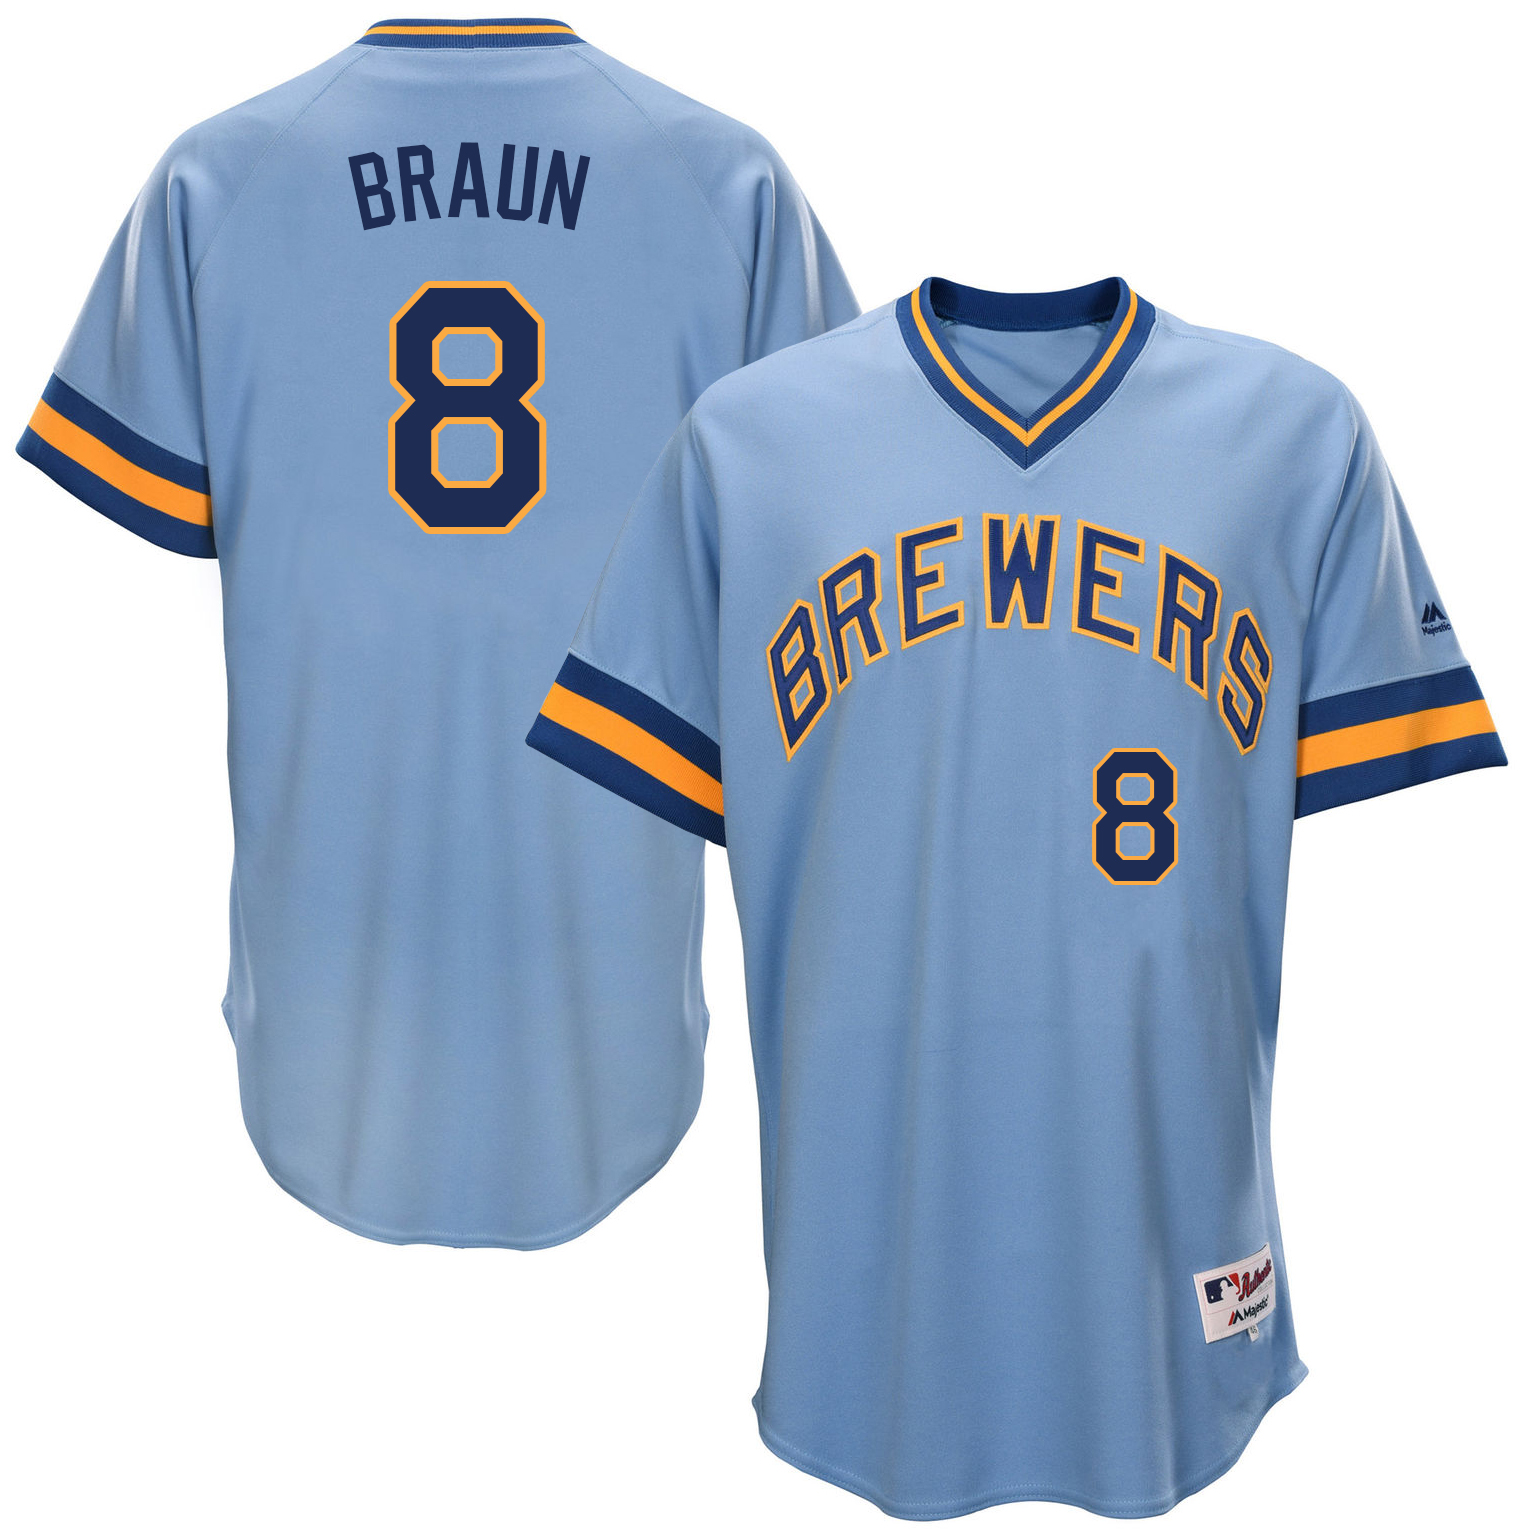 Brewers 8 Ryan Braun Light Blue Throwback Jersey